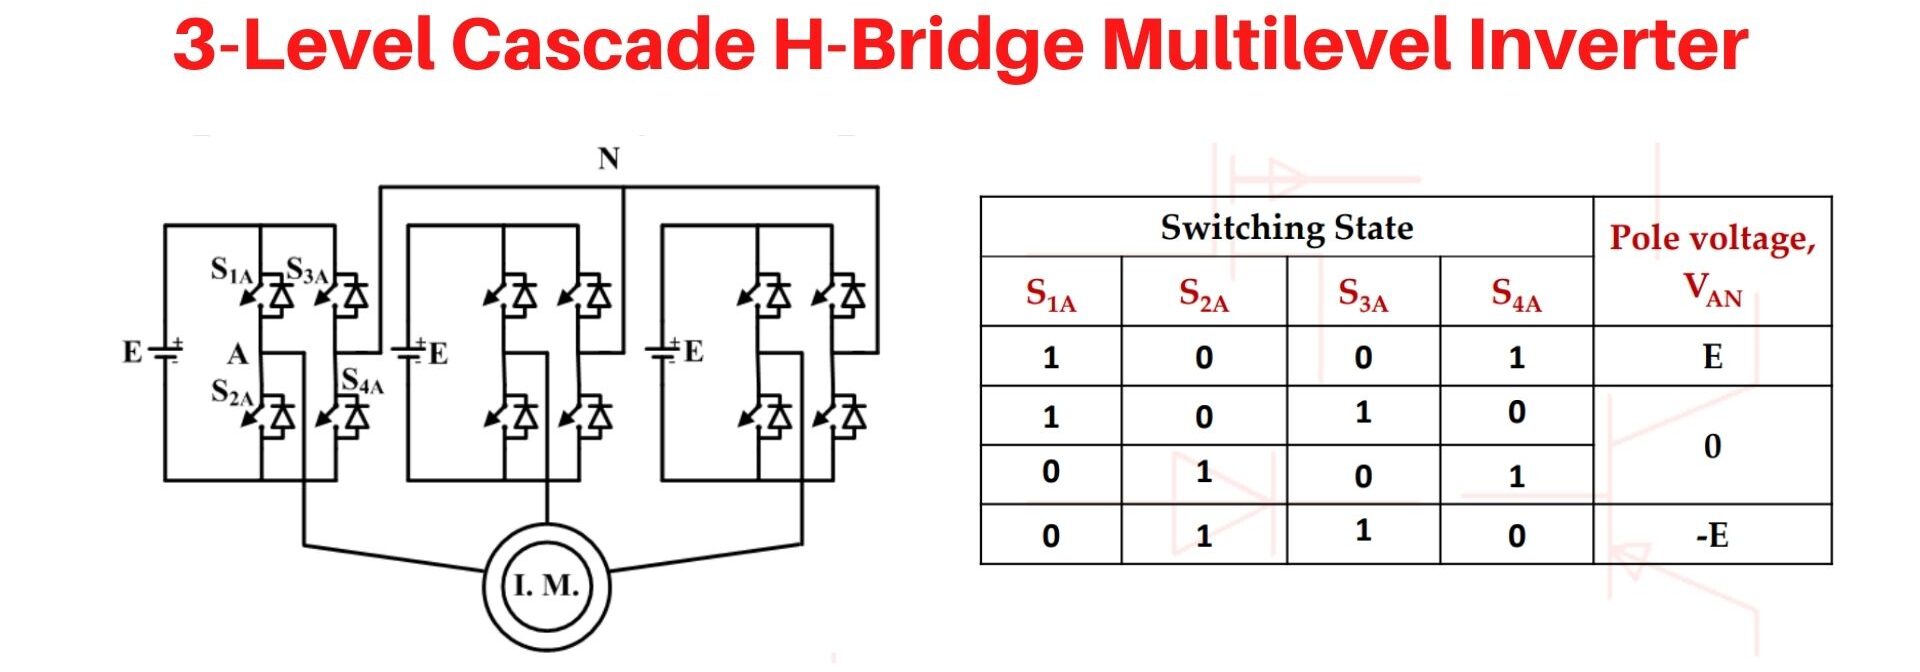 3-Level Cascade H-Bridge Multilevel Inverter